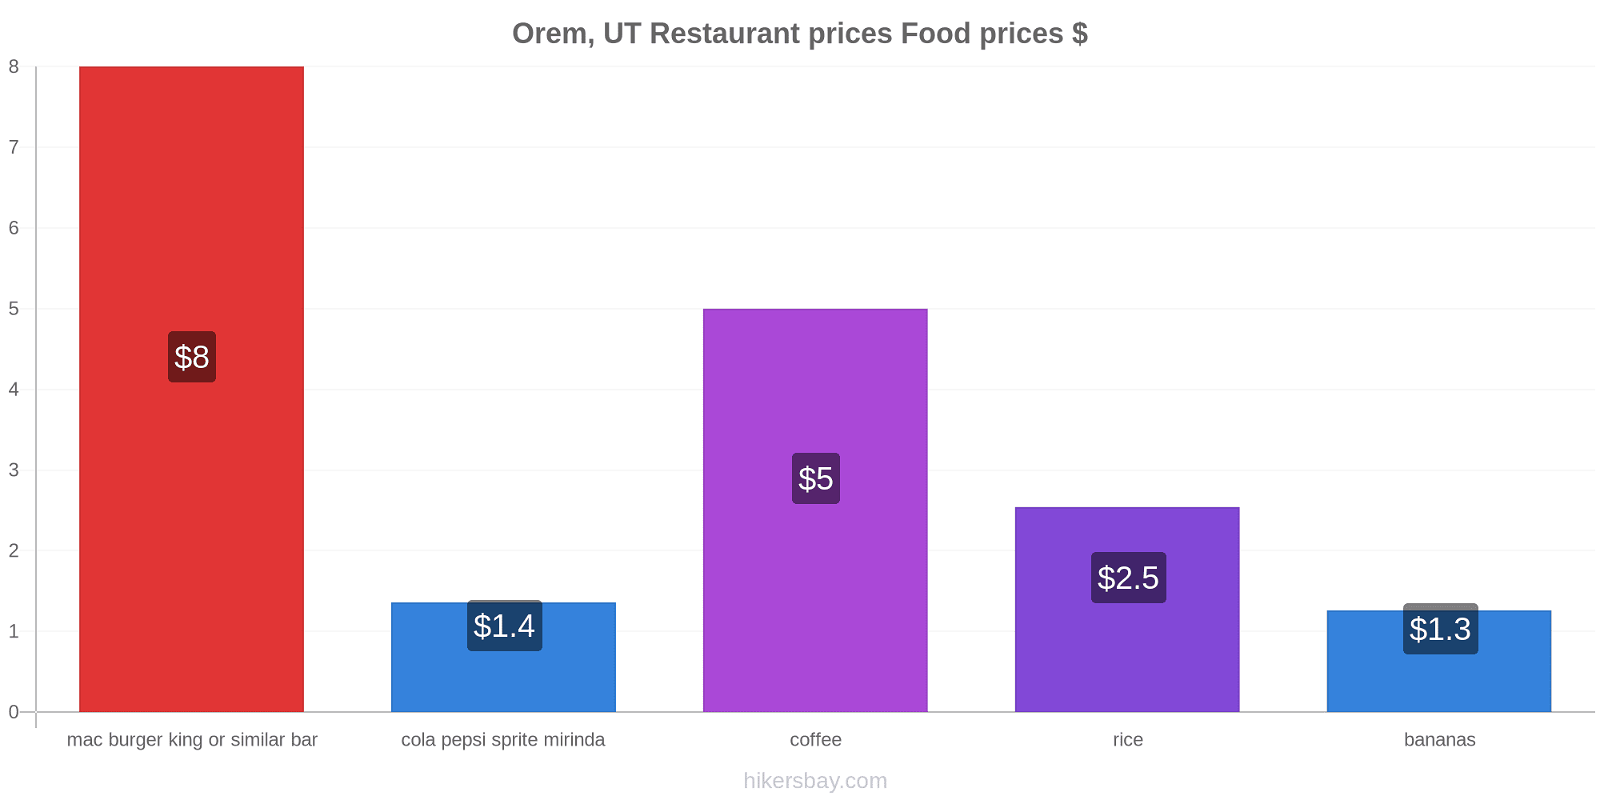 Orem, UT price changes hikersbay.com